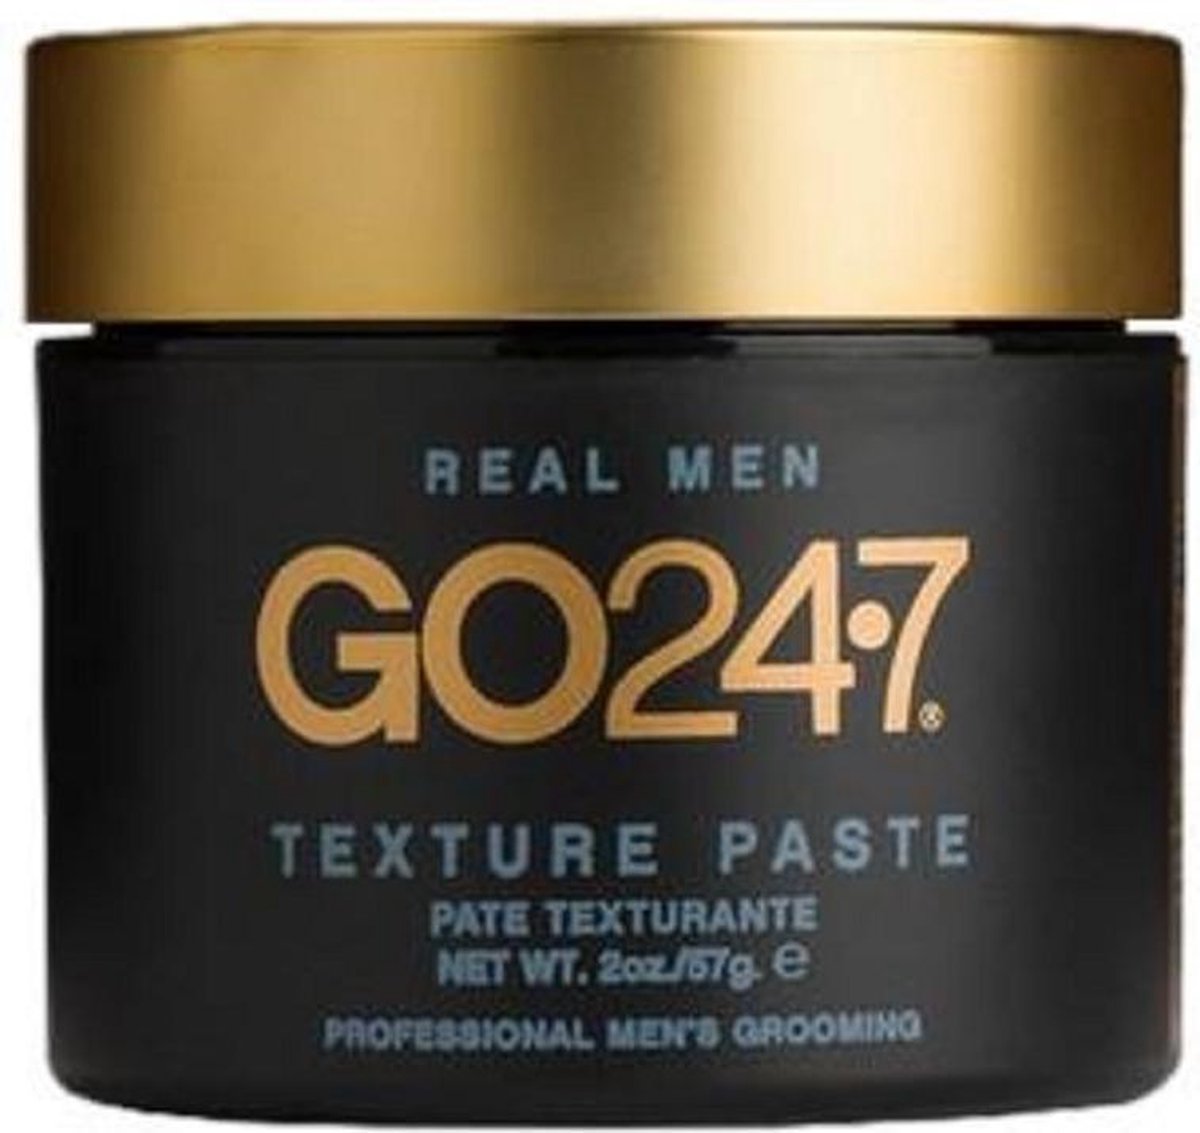 GO24.7 Texture Paste 57g